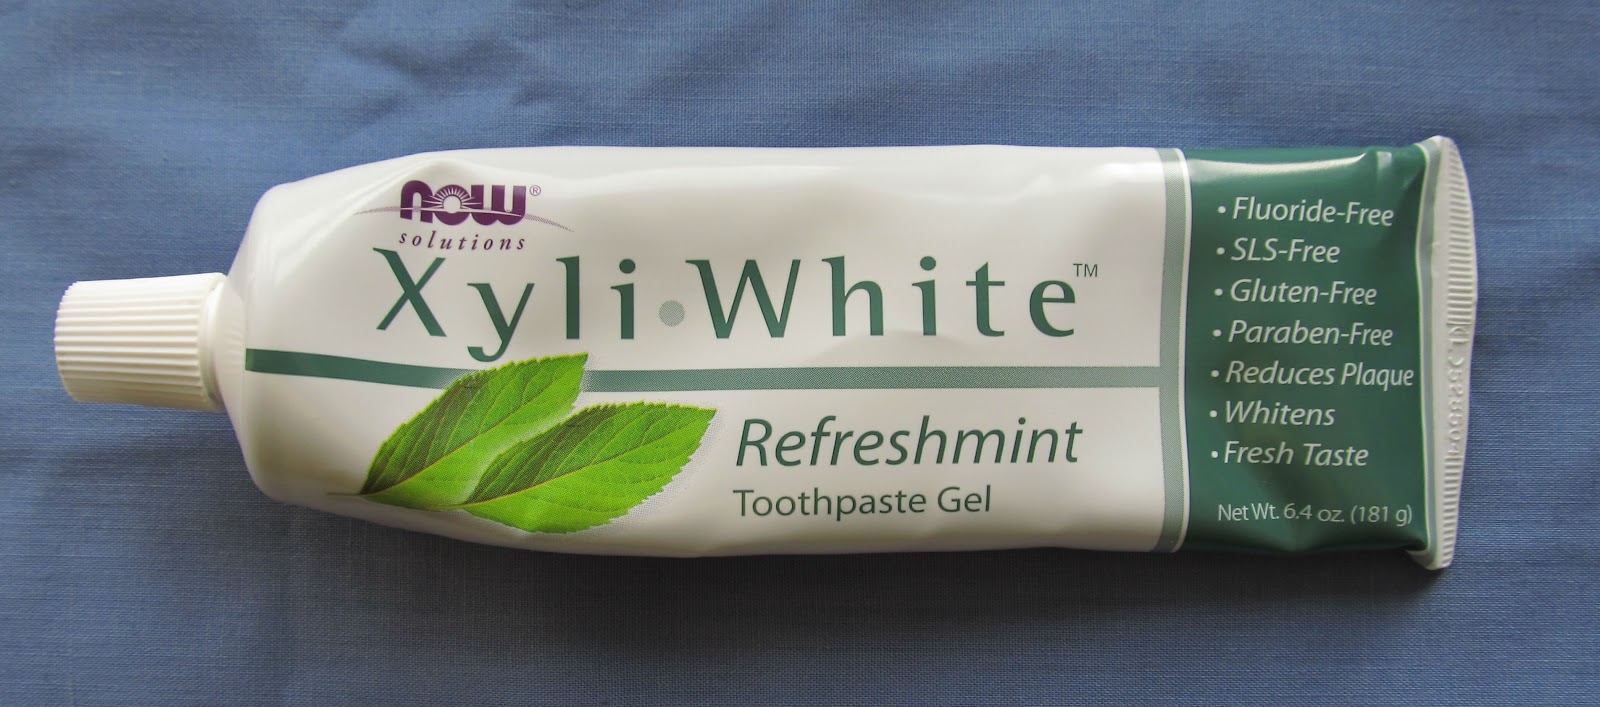 Освіжаюча м'ятна зубна гель-паста Xyliwhite від Now Foods